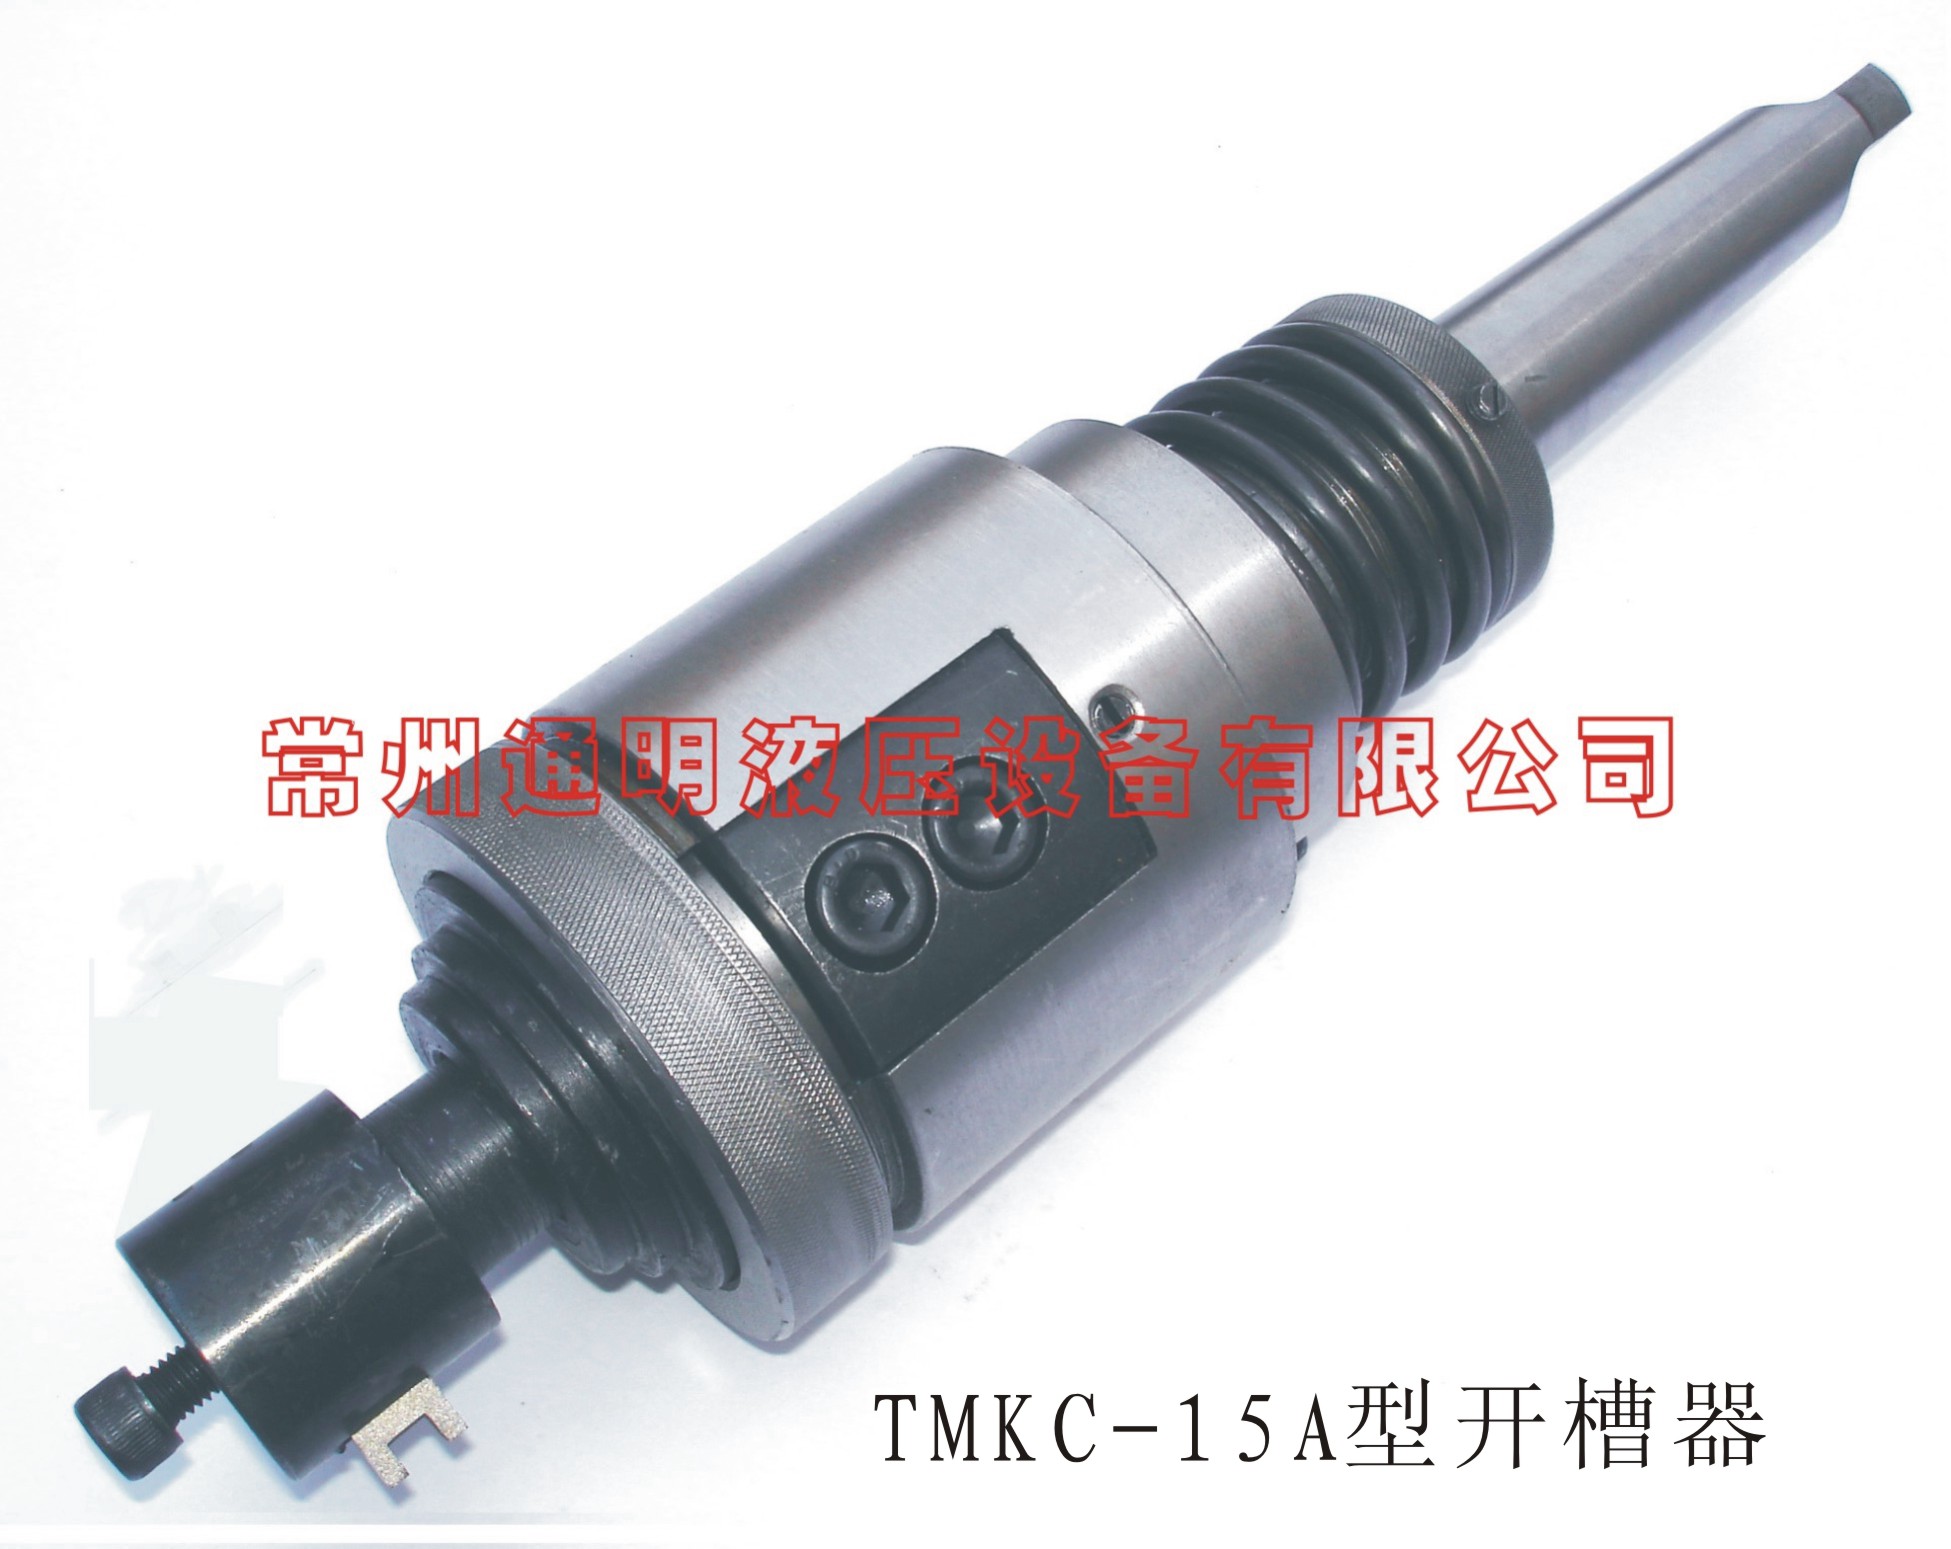 TMKC-15A型开槽器